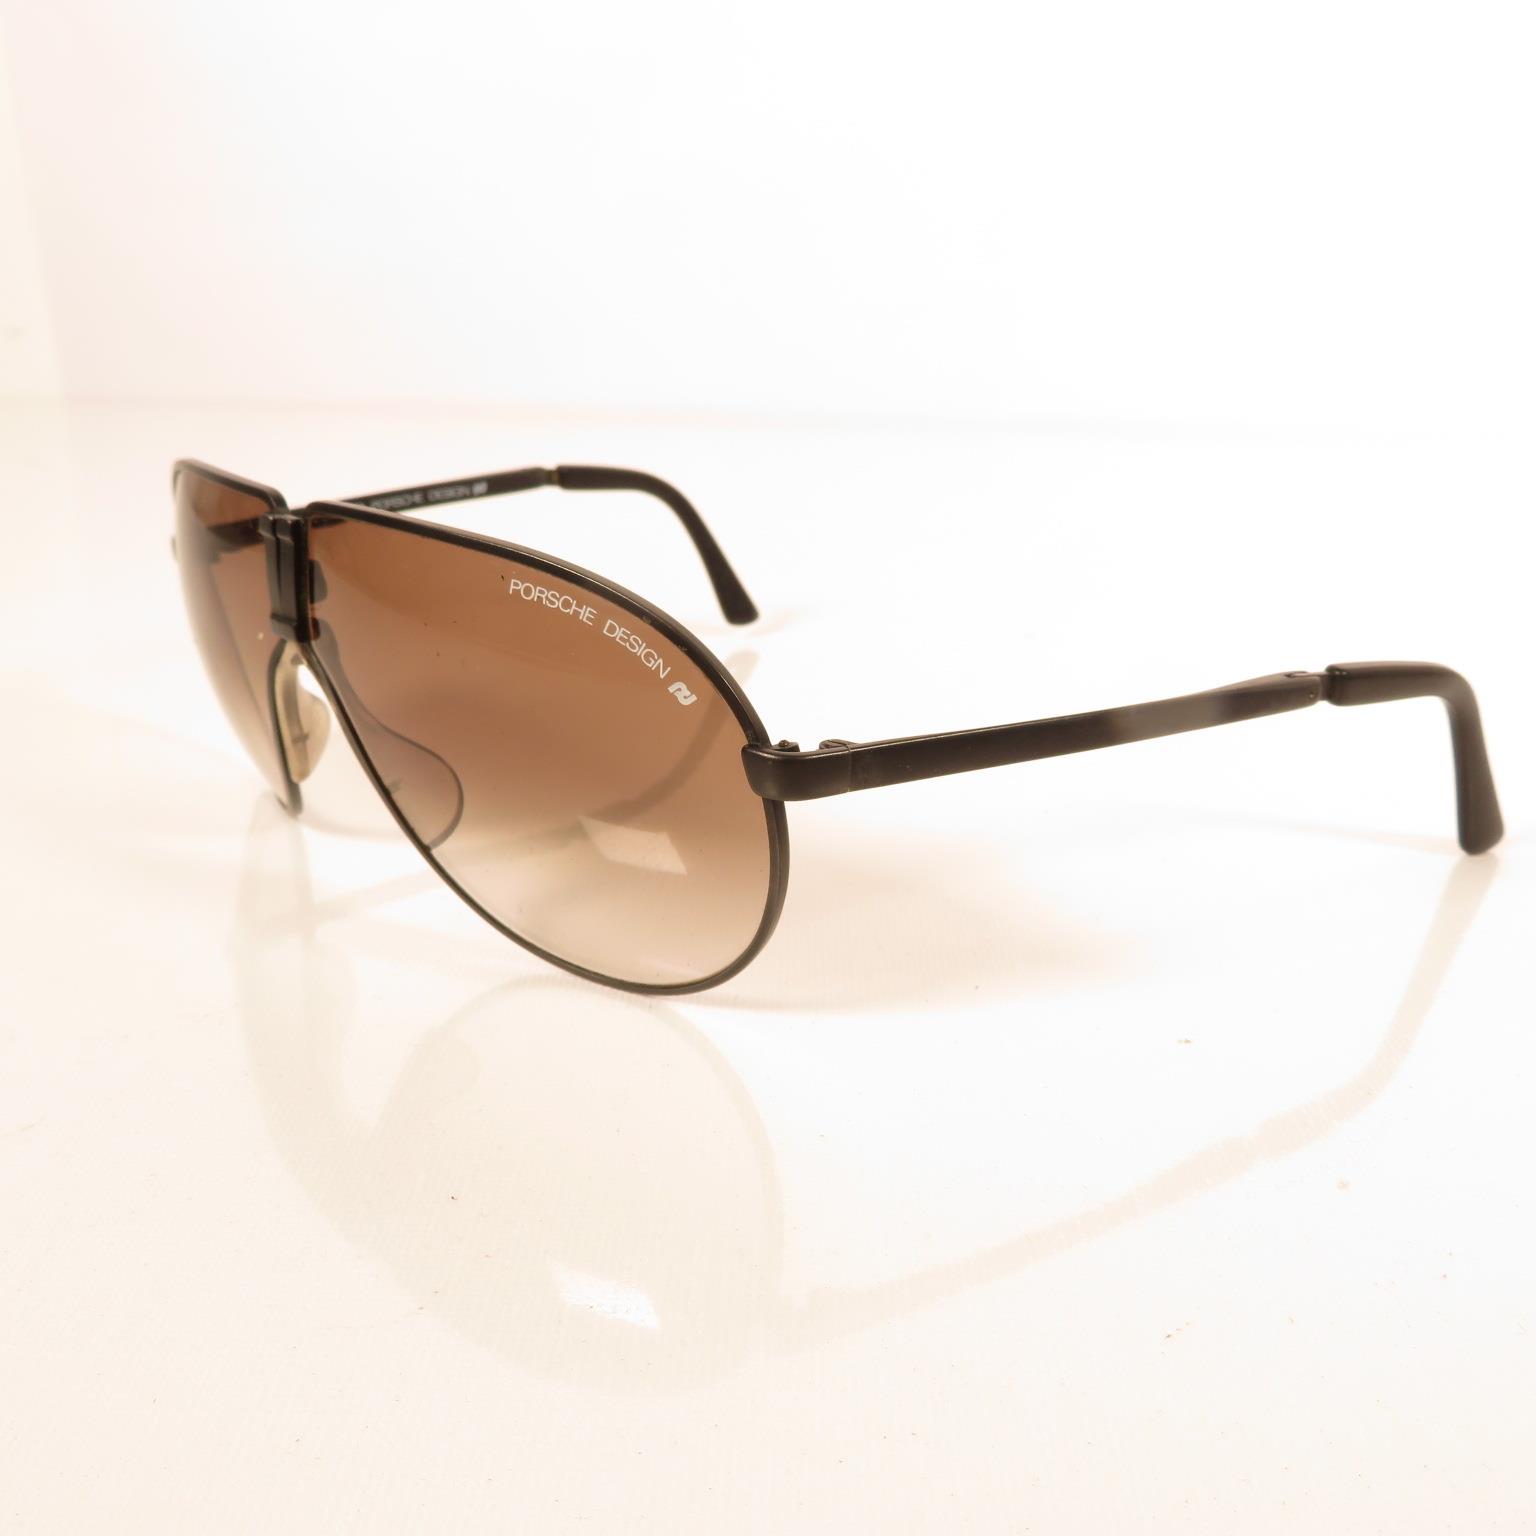 Pair of Porsche Folding Sunglasses, Per Sol folding Sunglasses, Oakley sunglasses and Porsche design - Image 15 of 17